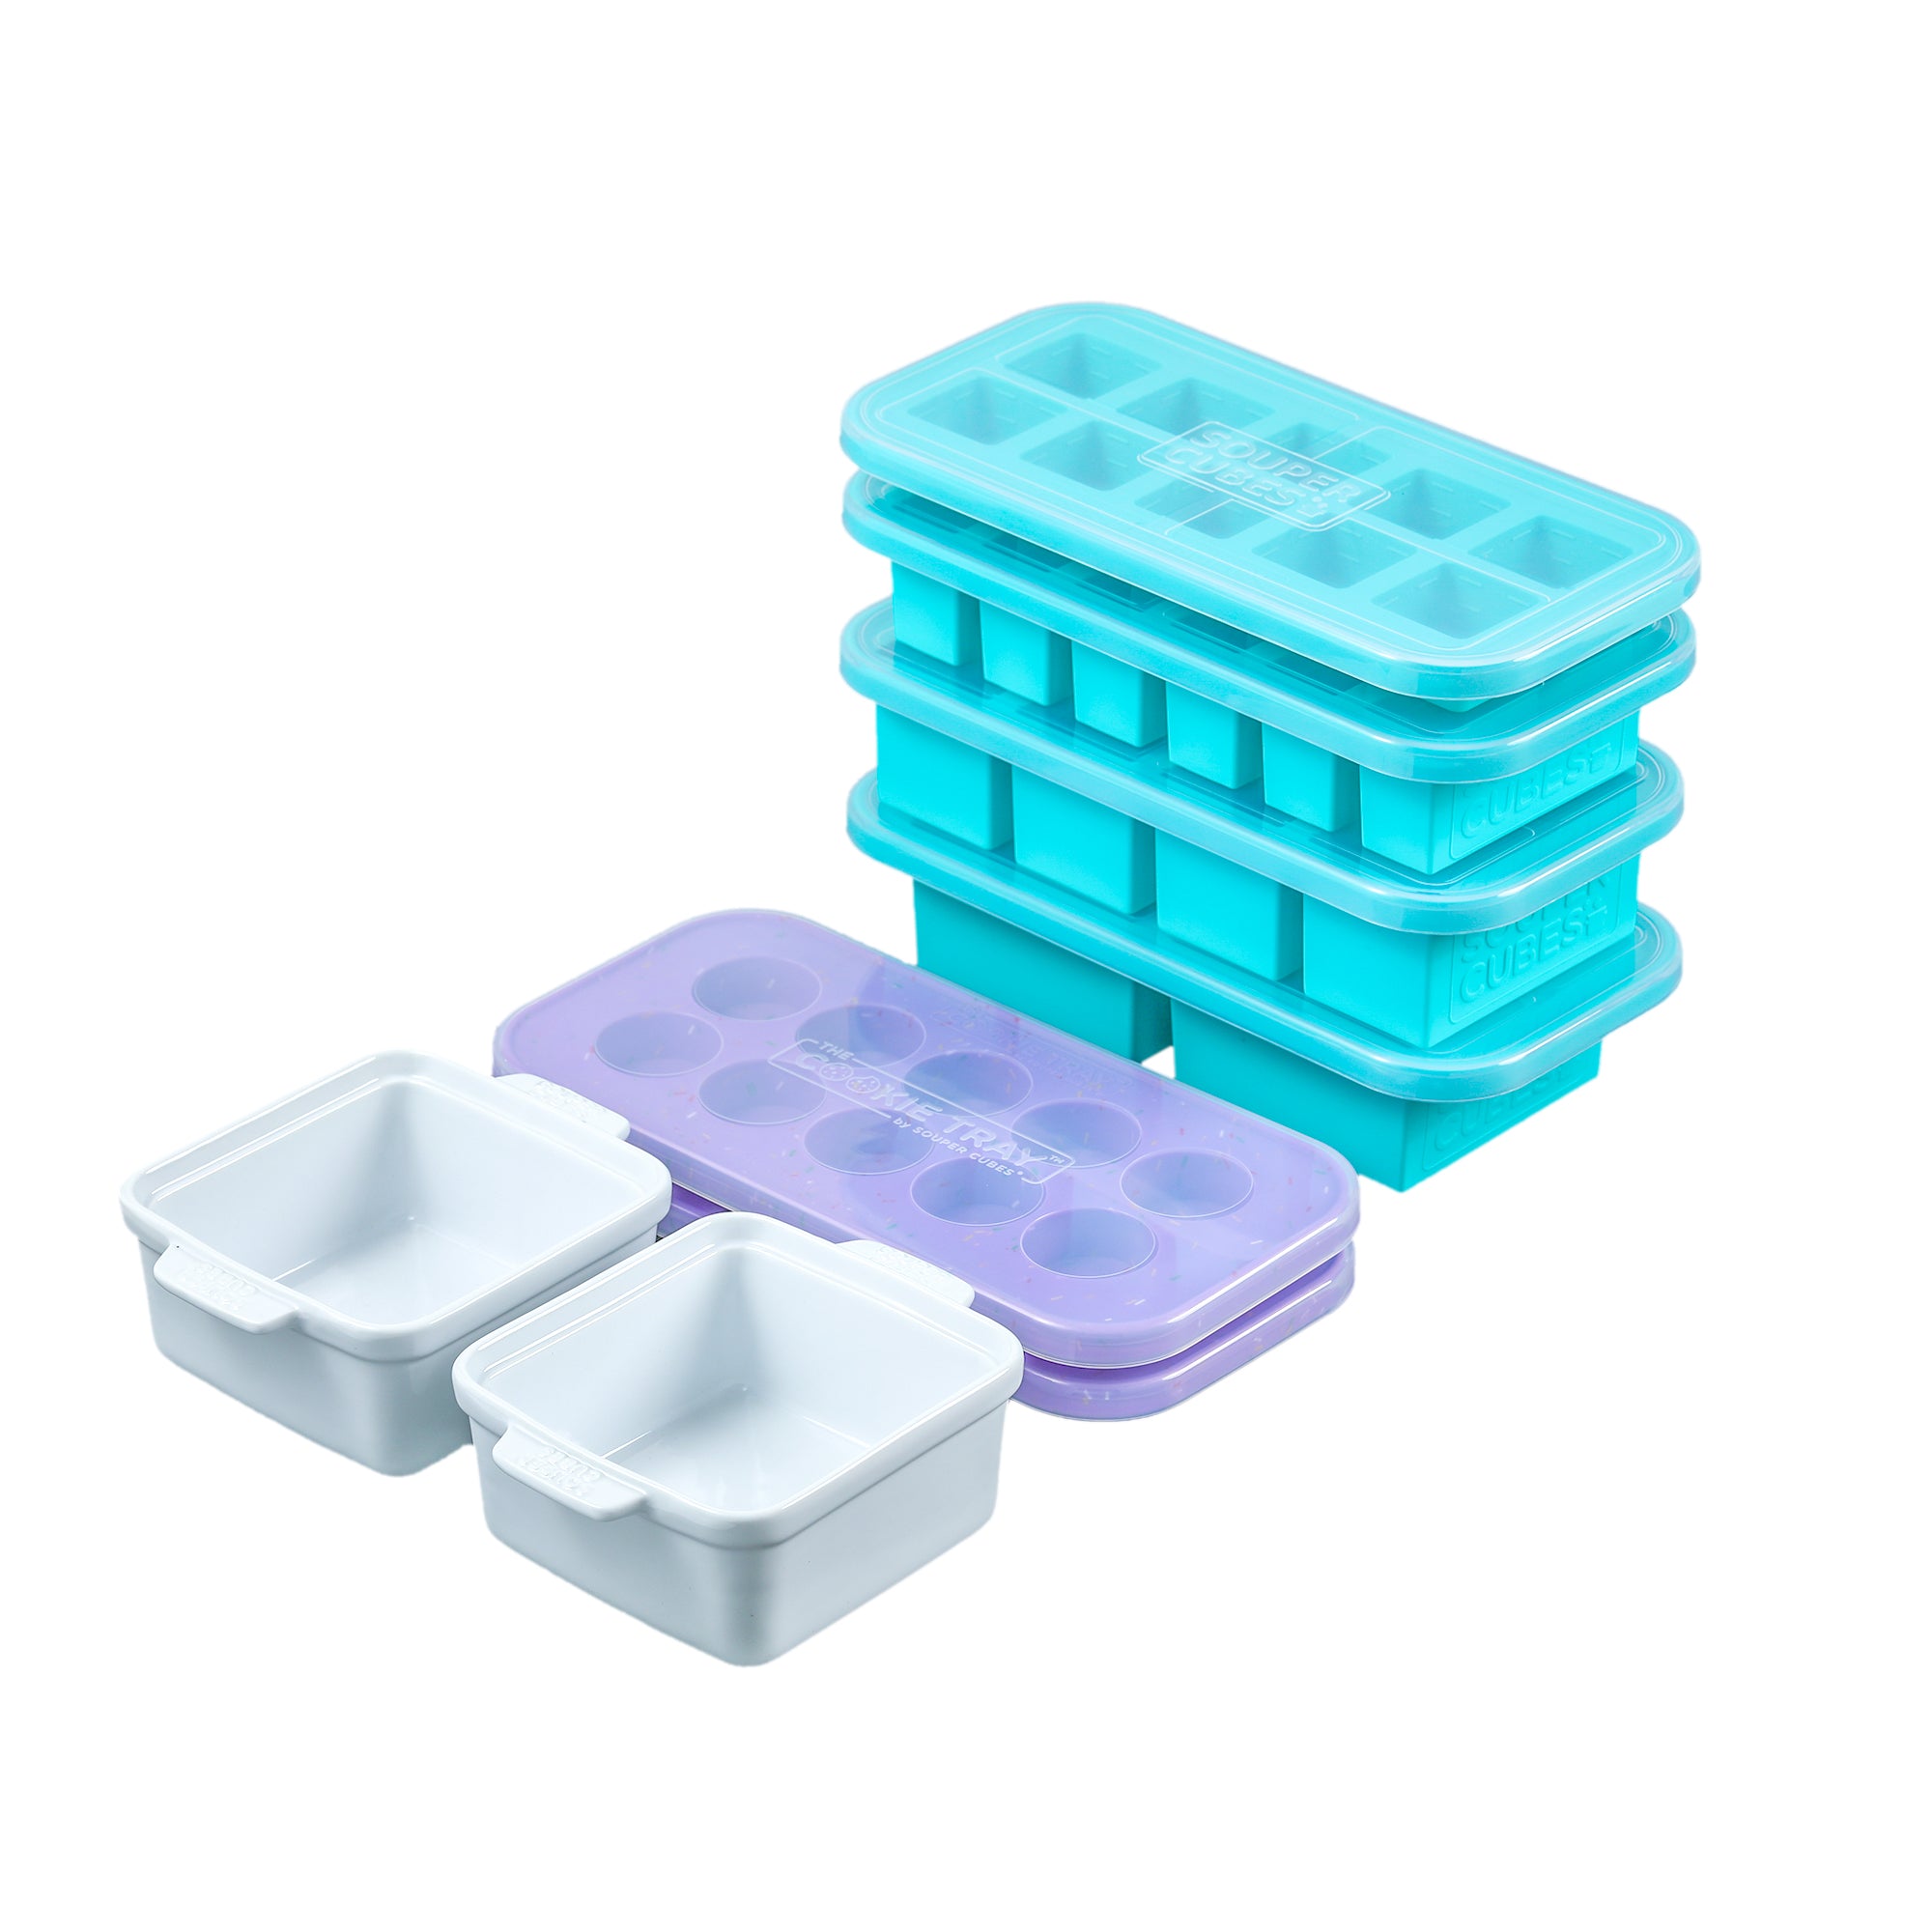 Freezer Tray Complete Set